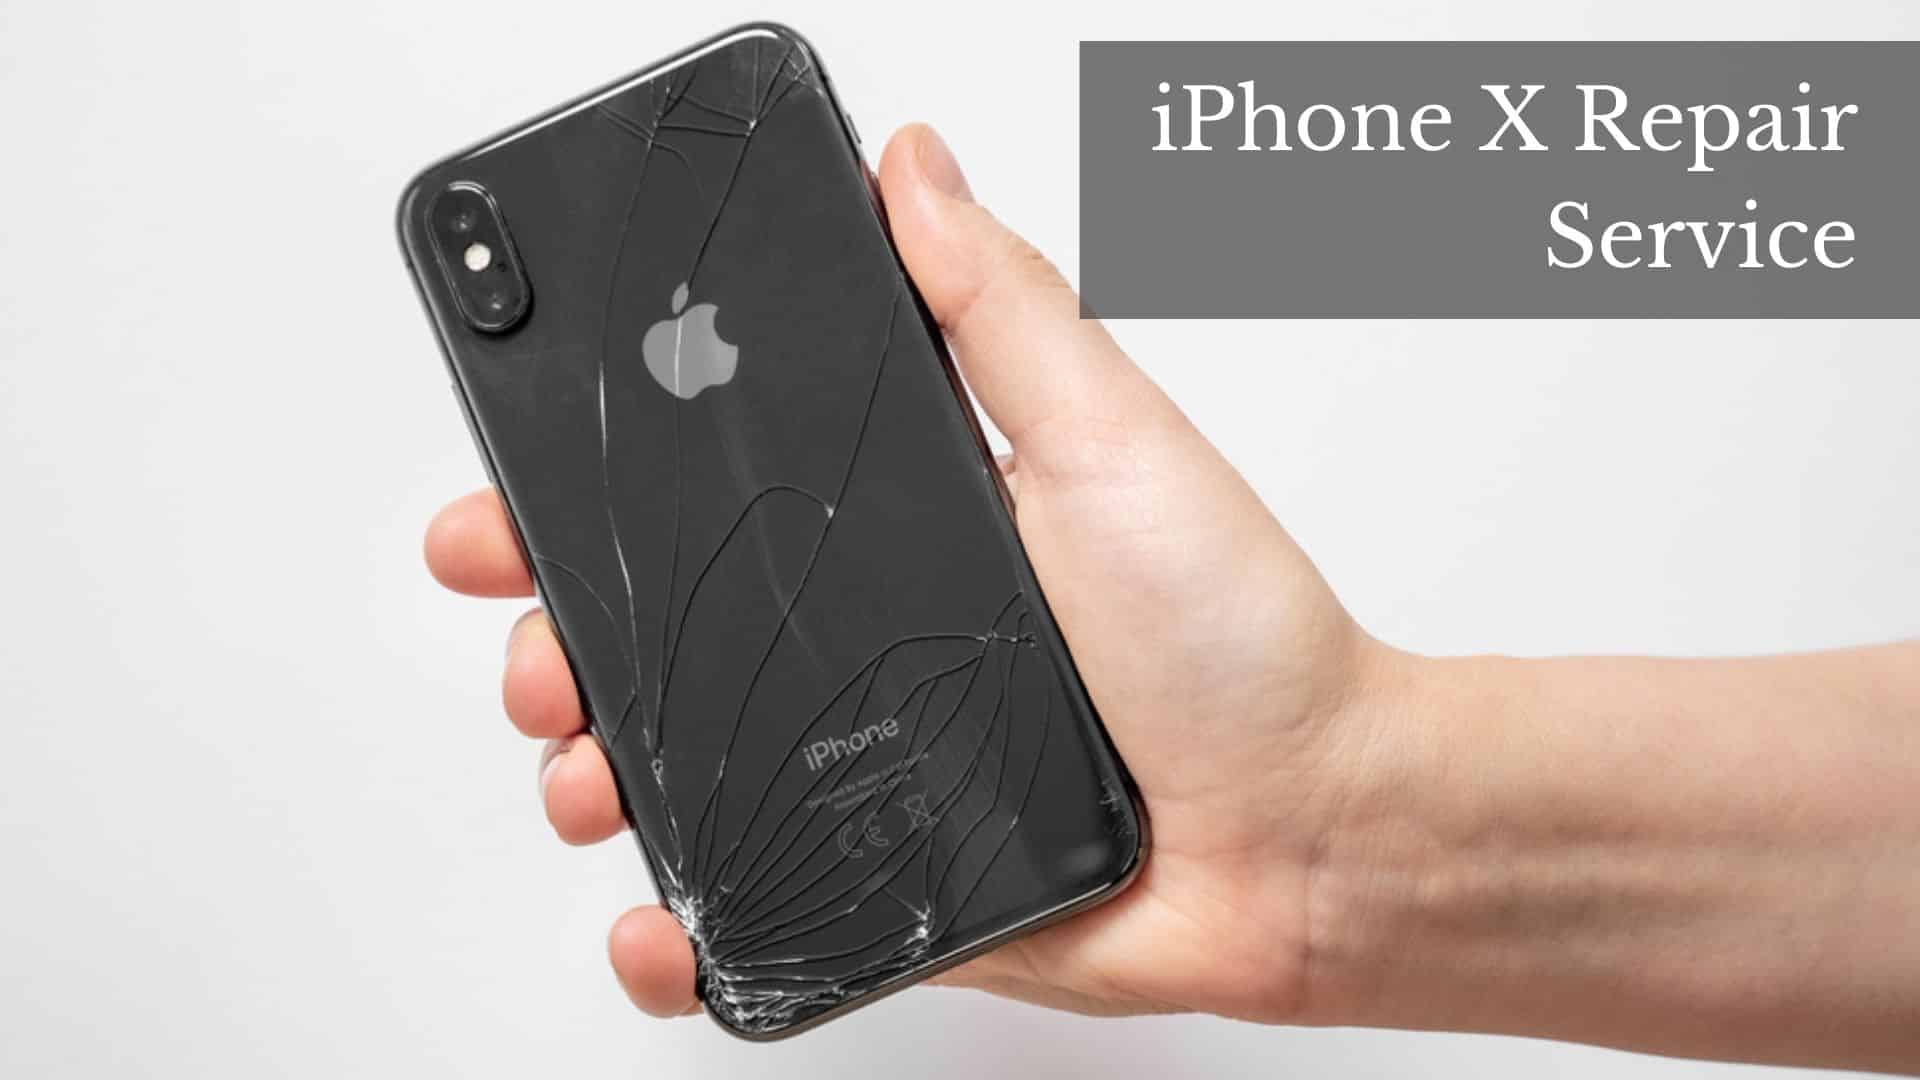 iPhone X Repair Service